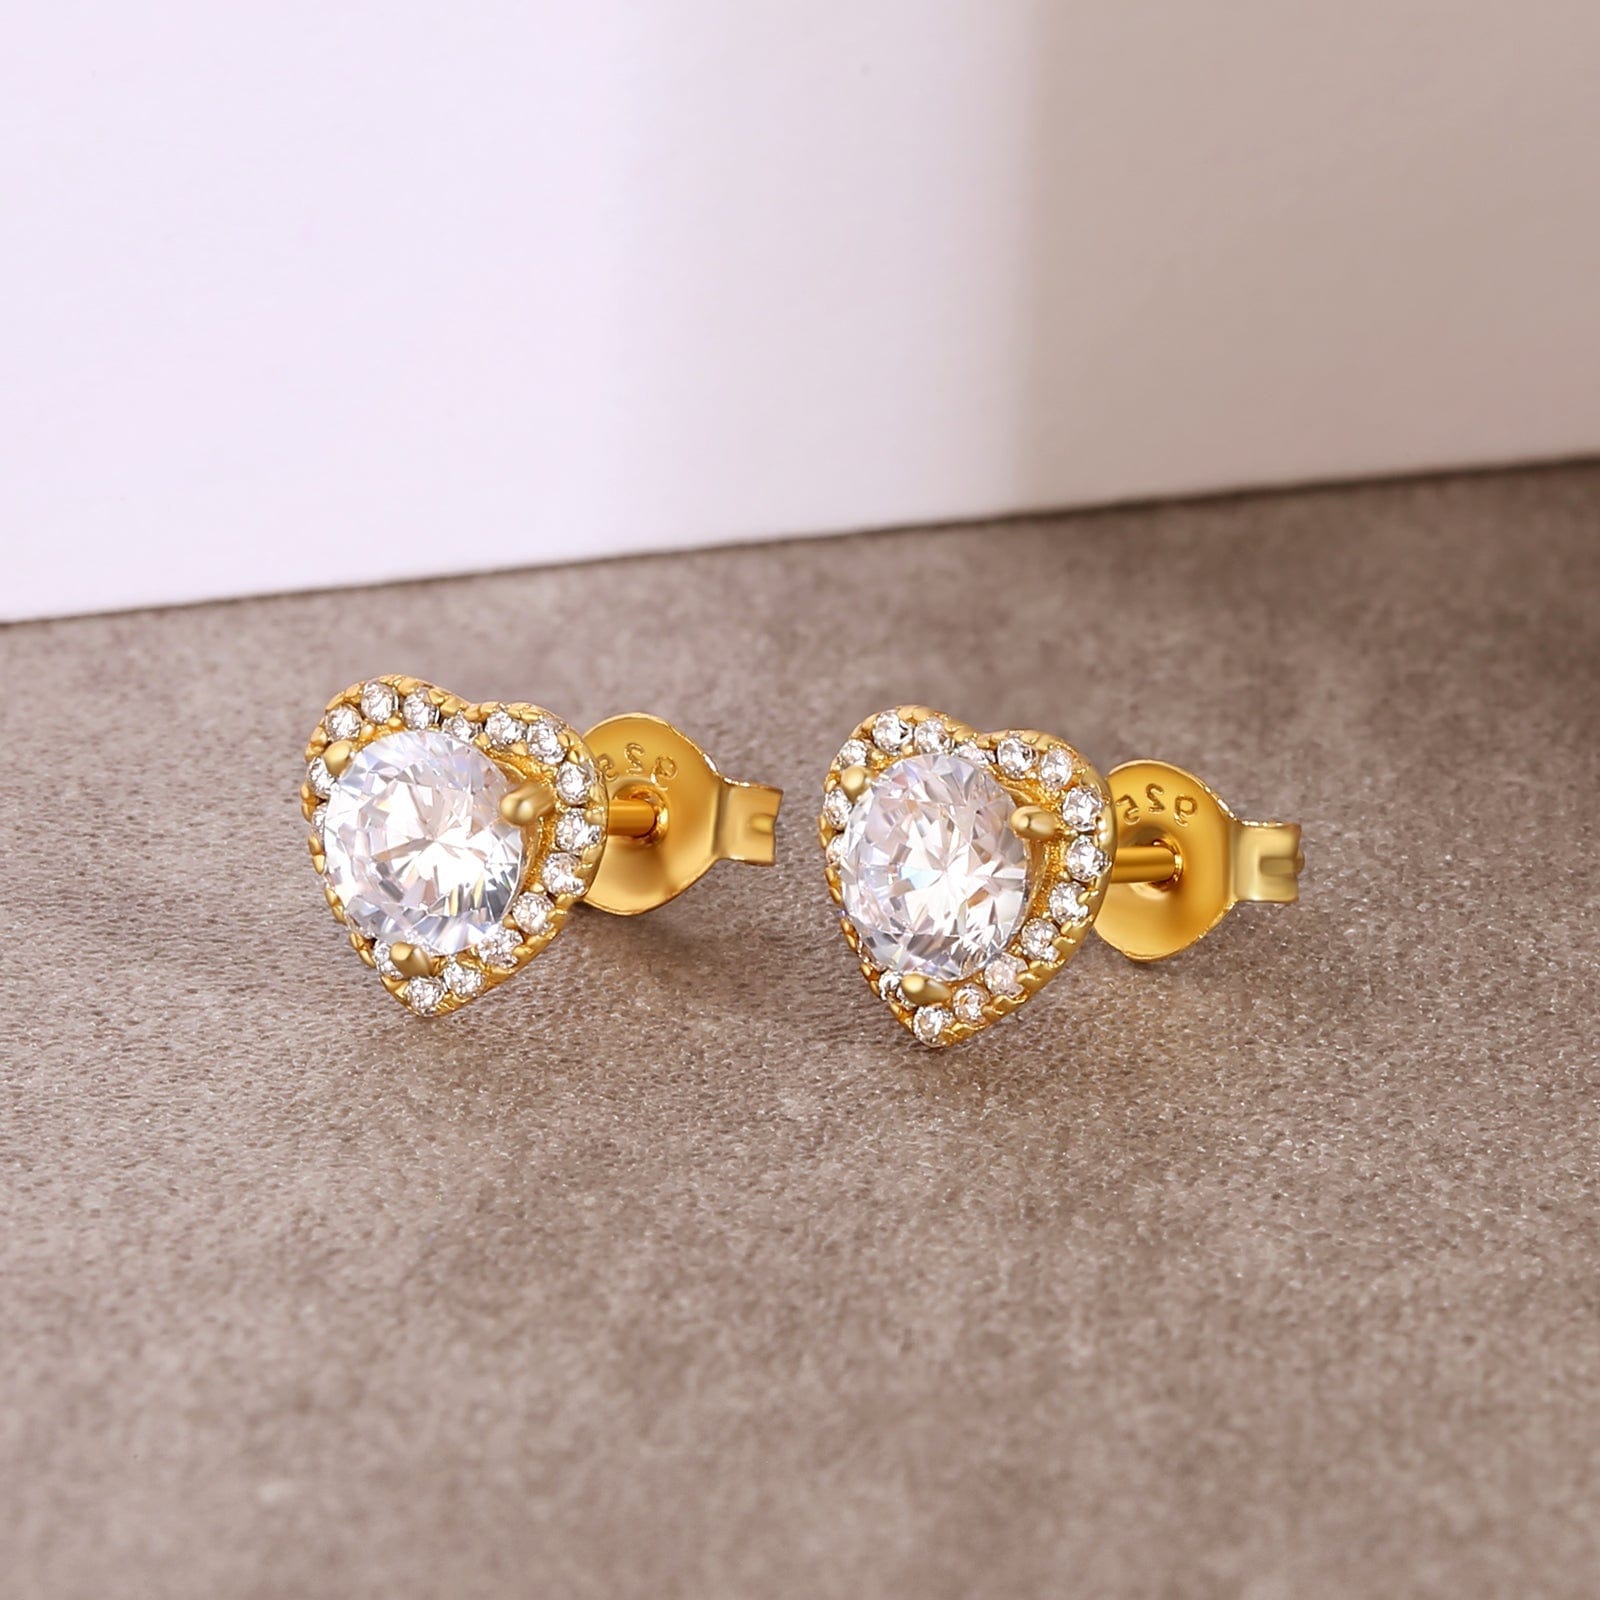 Heart-shaped Stud Earrings CZ Stone in 14K Gold / White Gold